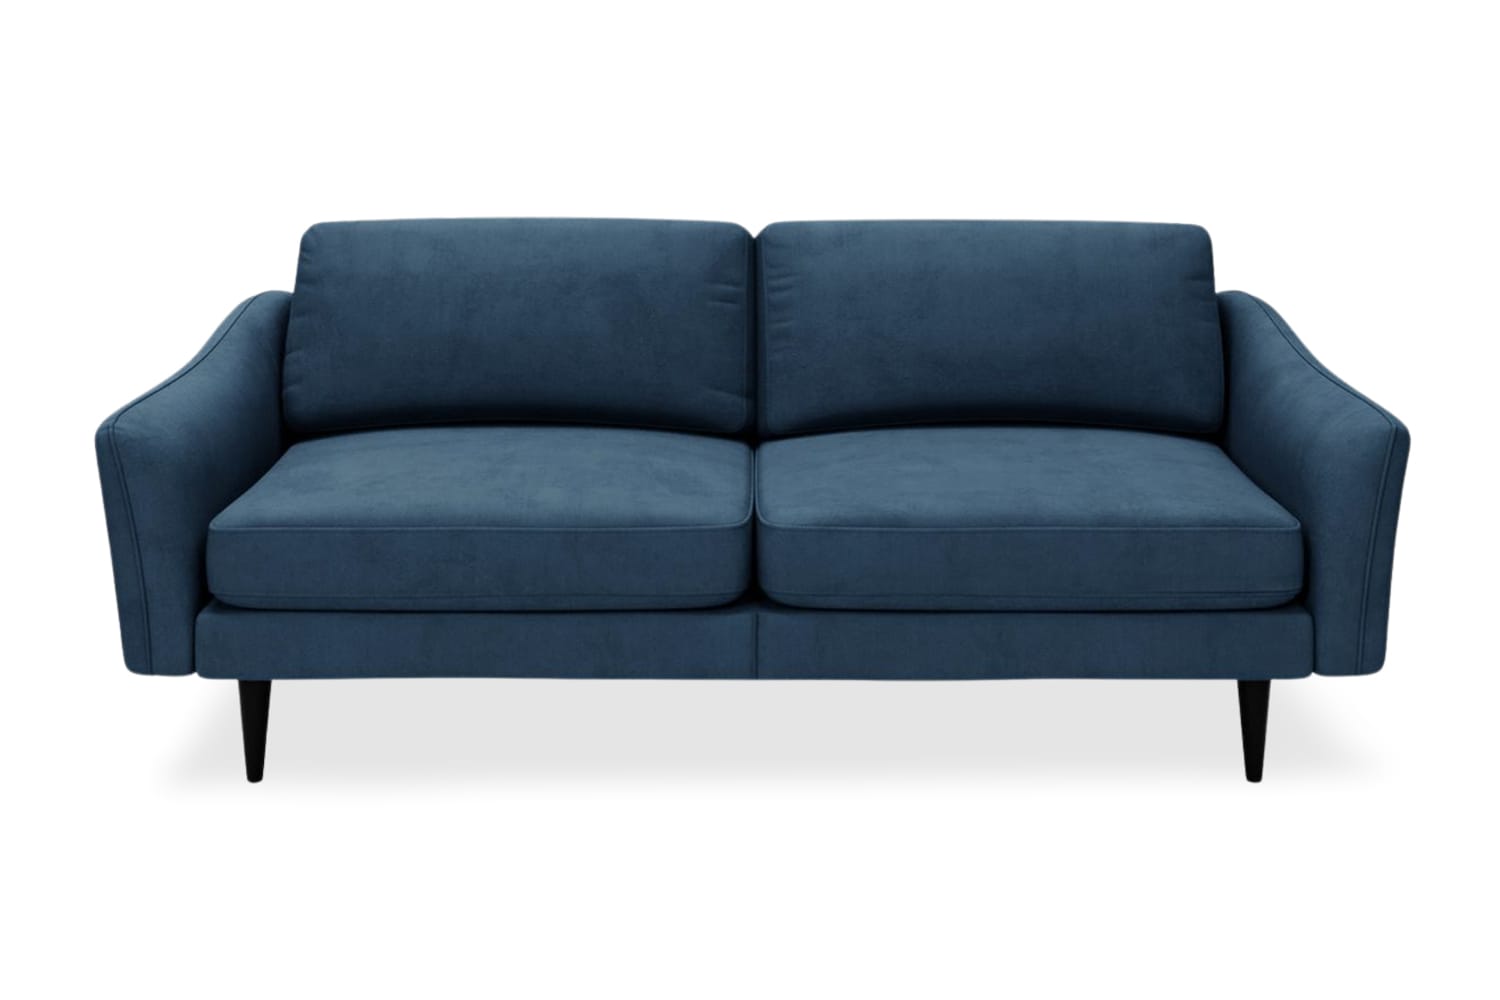 SNUG | The Rebel 3 Seater Sofa in Blue Steel variant_40414890065968